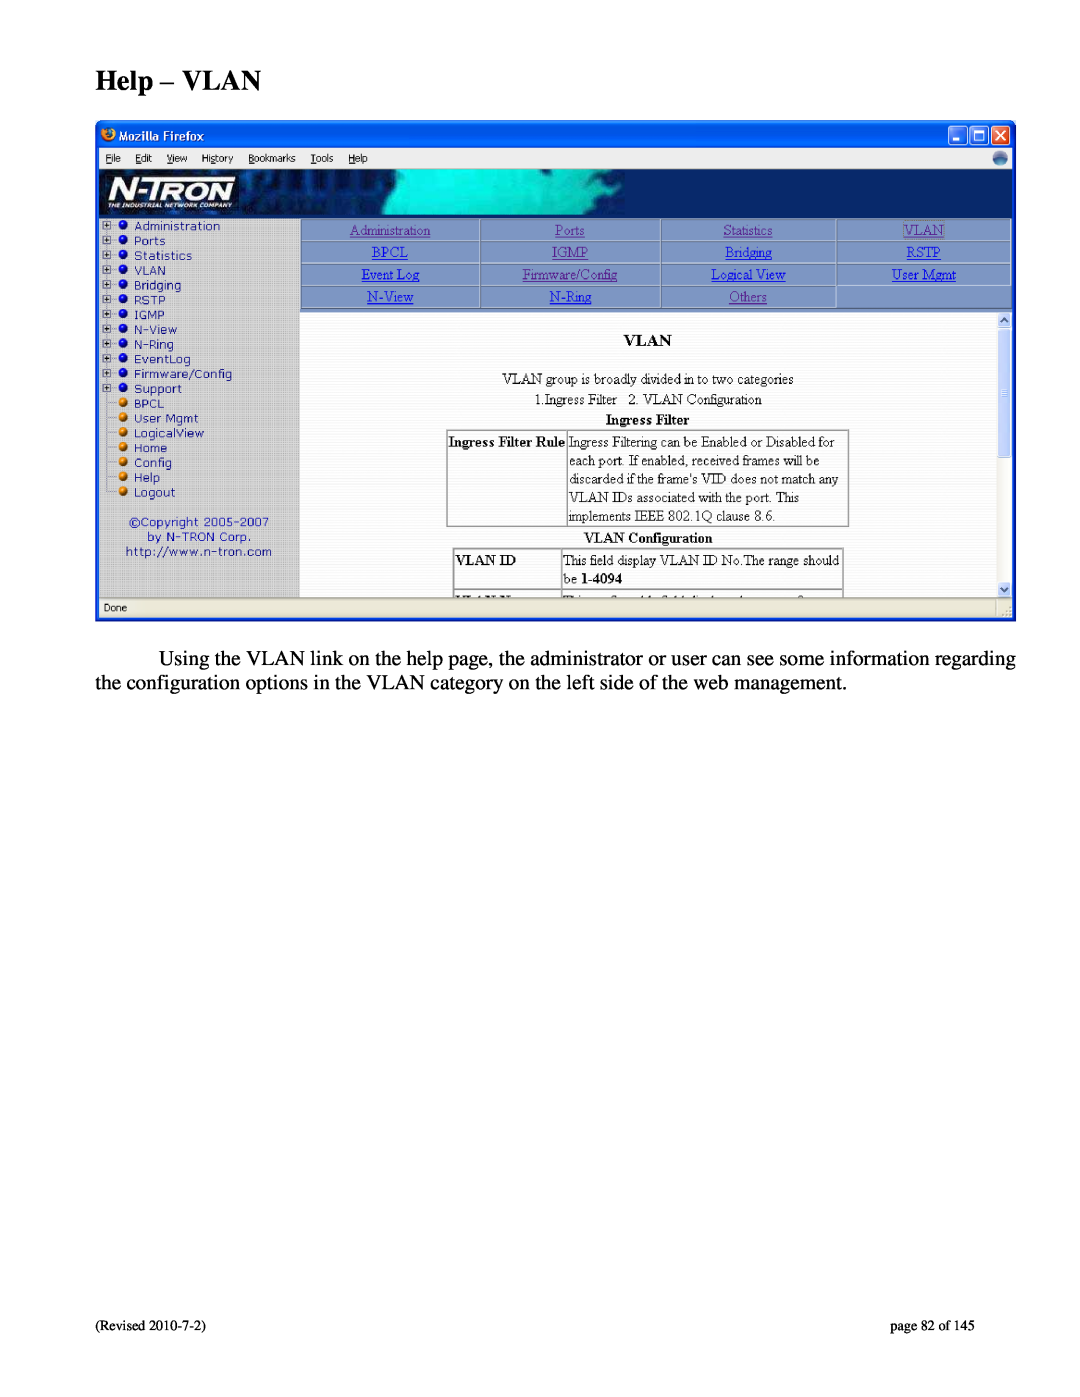 N-Tron 9000 user manual Help - VLAN, page 82 of 